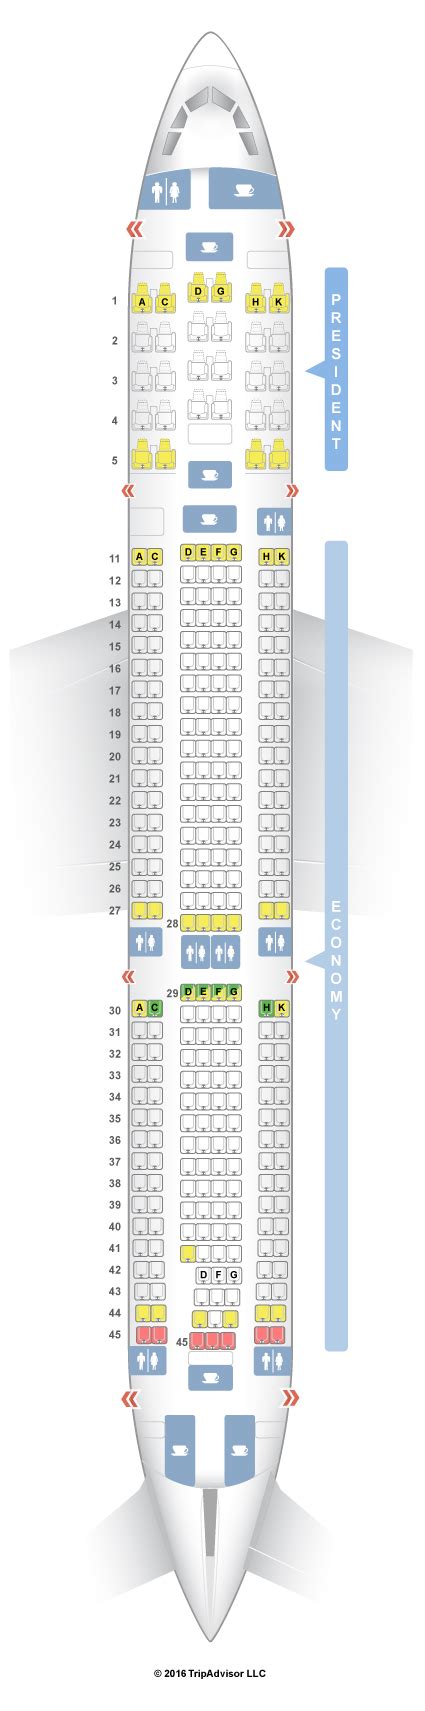 Seatguru Seat Map Aeroflot Seatguru Seating Map Sexiz Pix